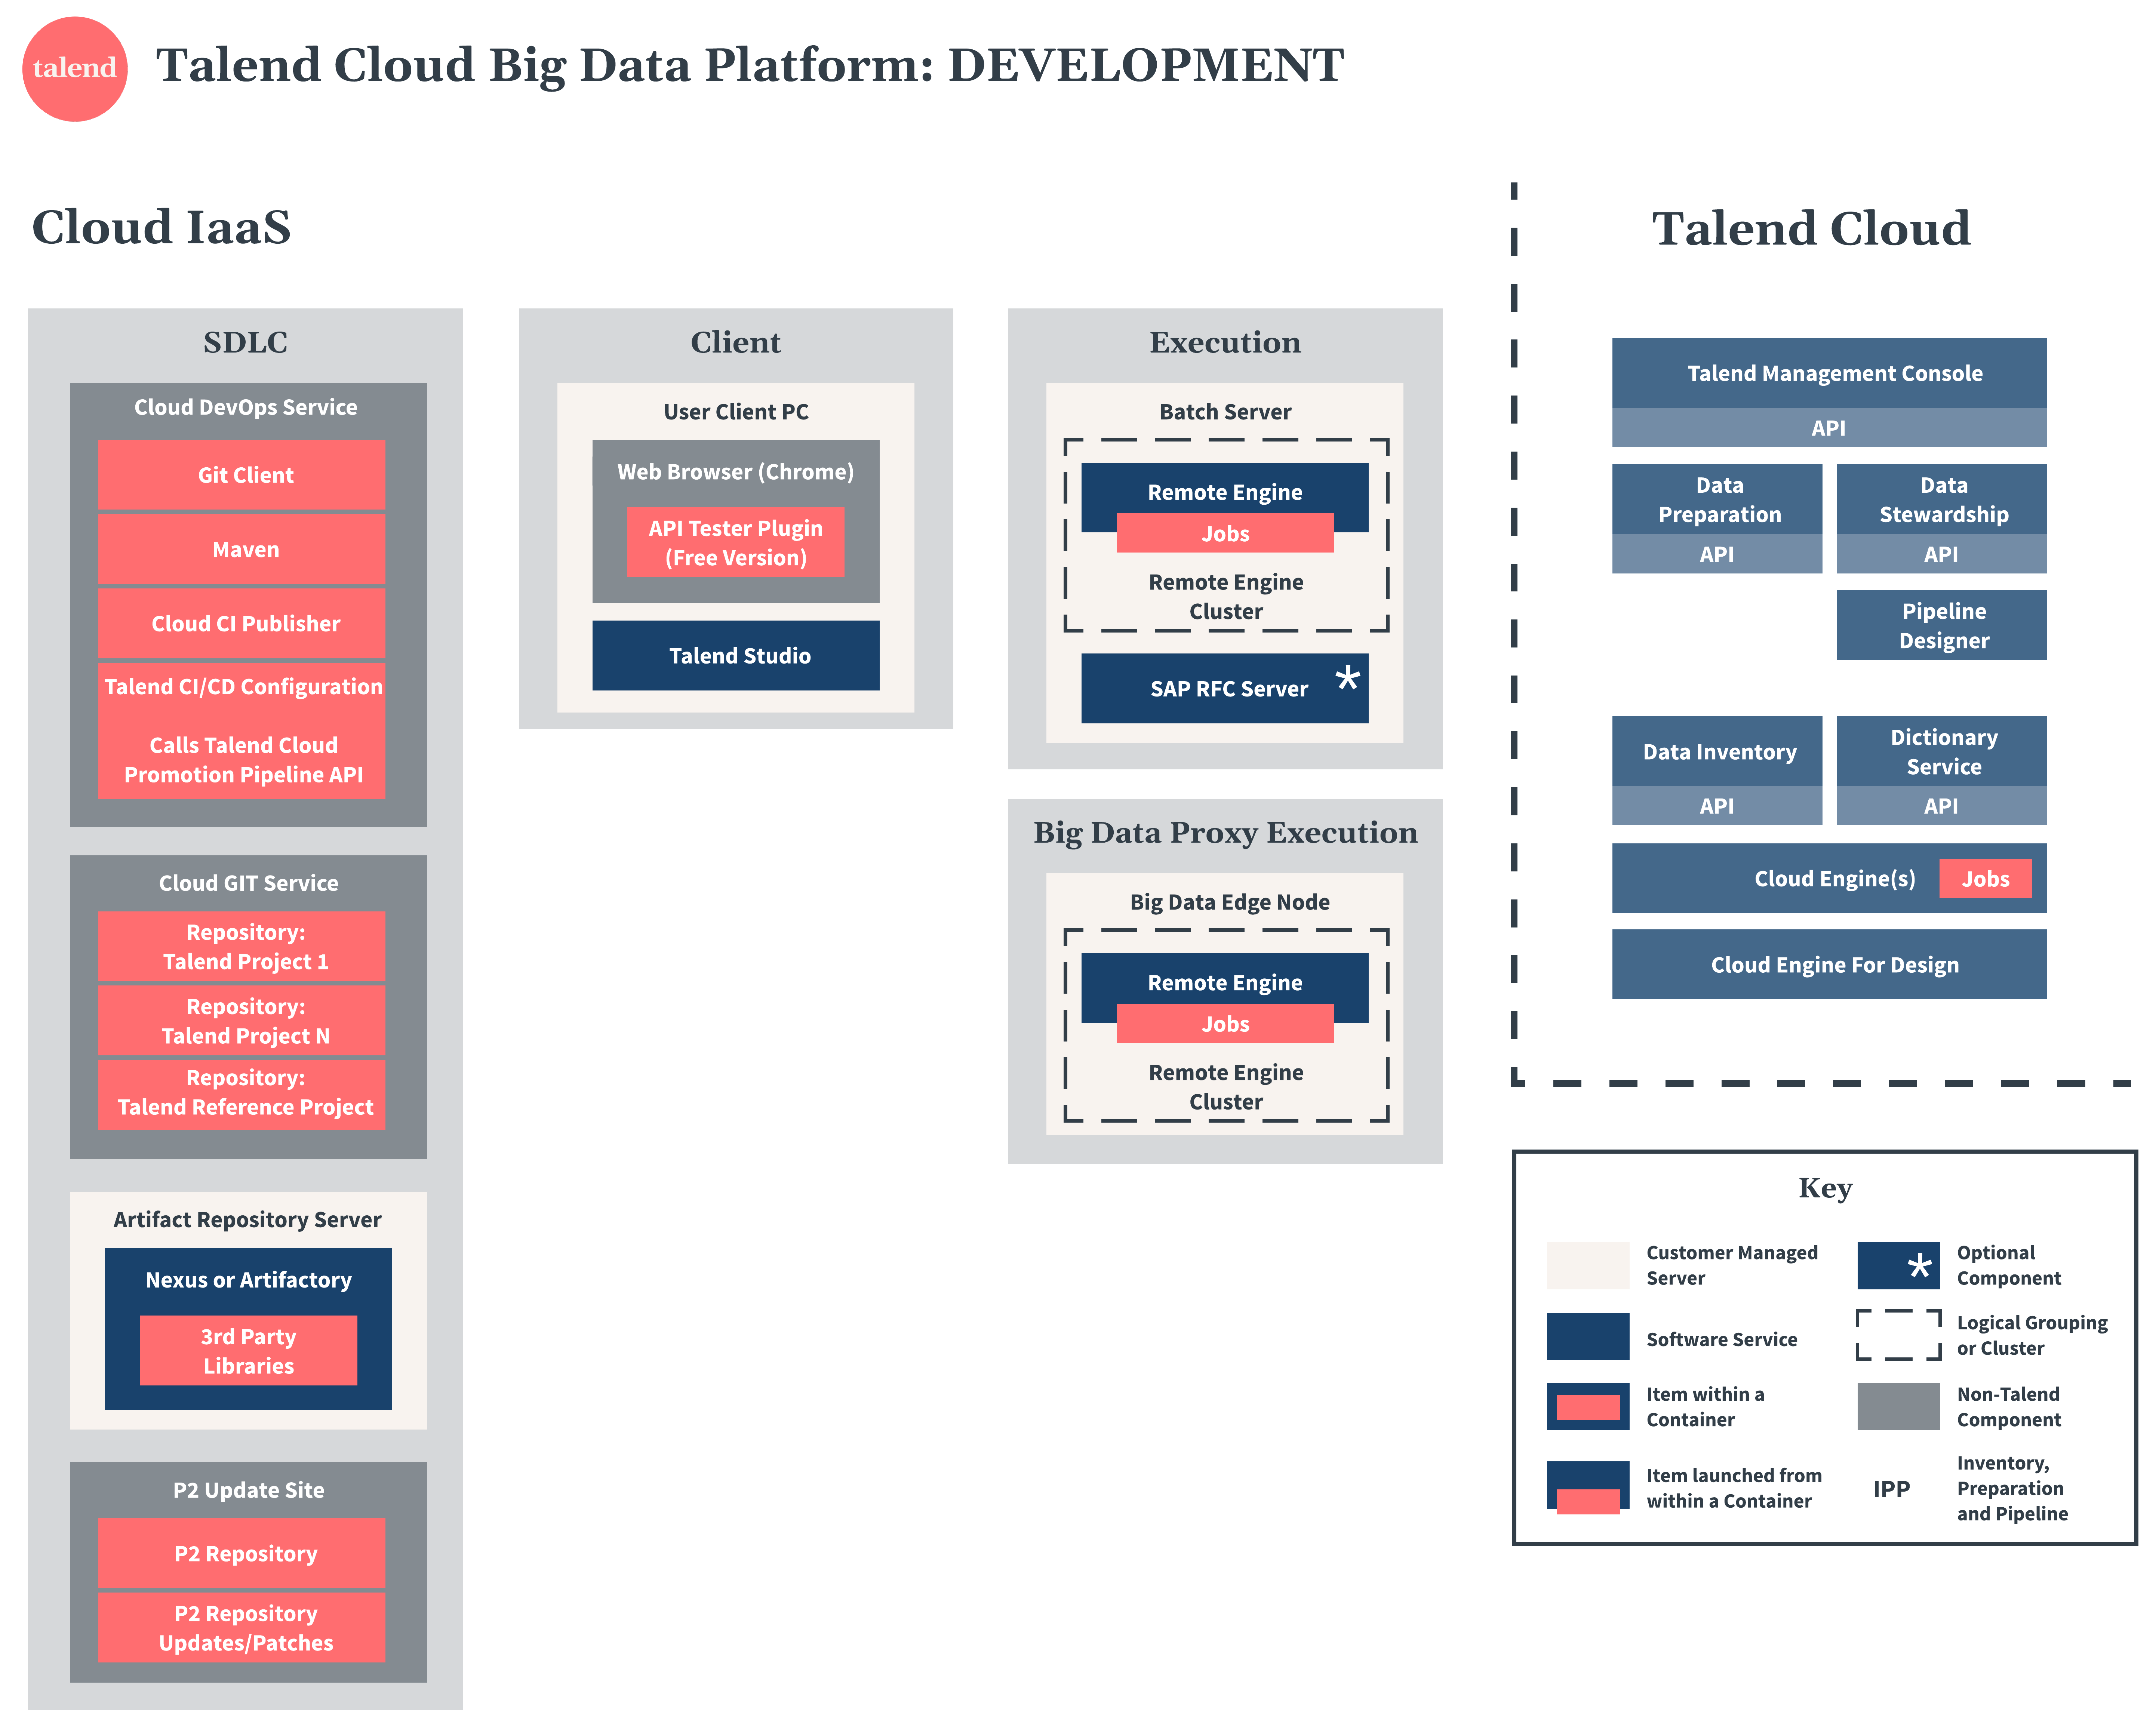 Talend Cloud Big Data Platform development diagram.